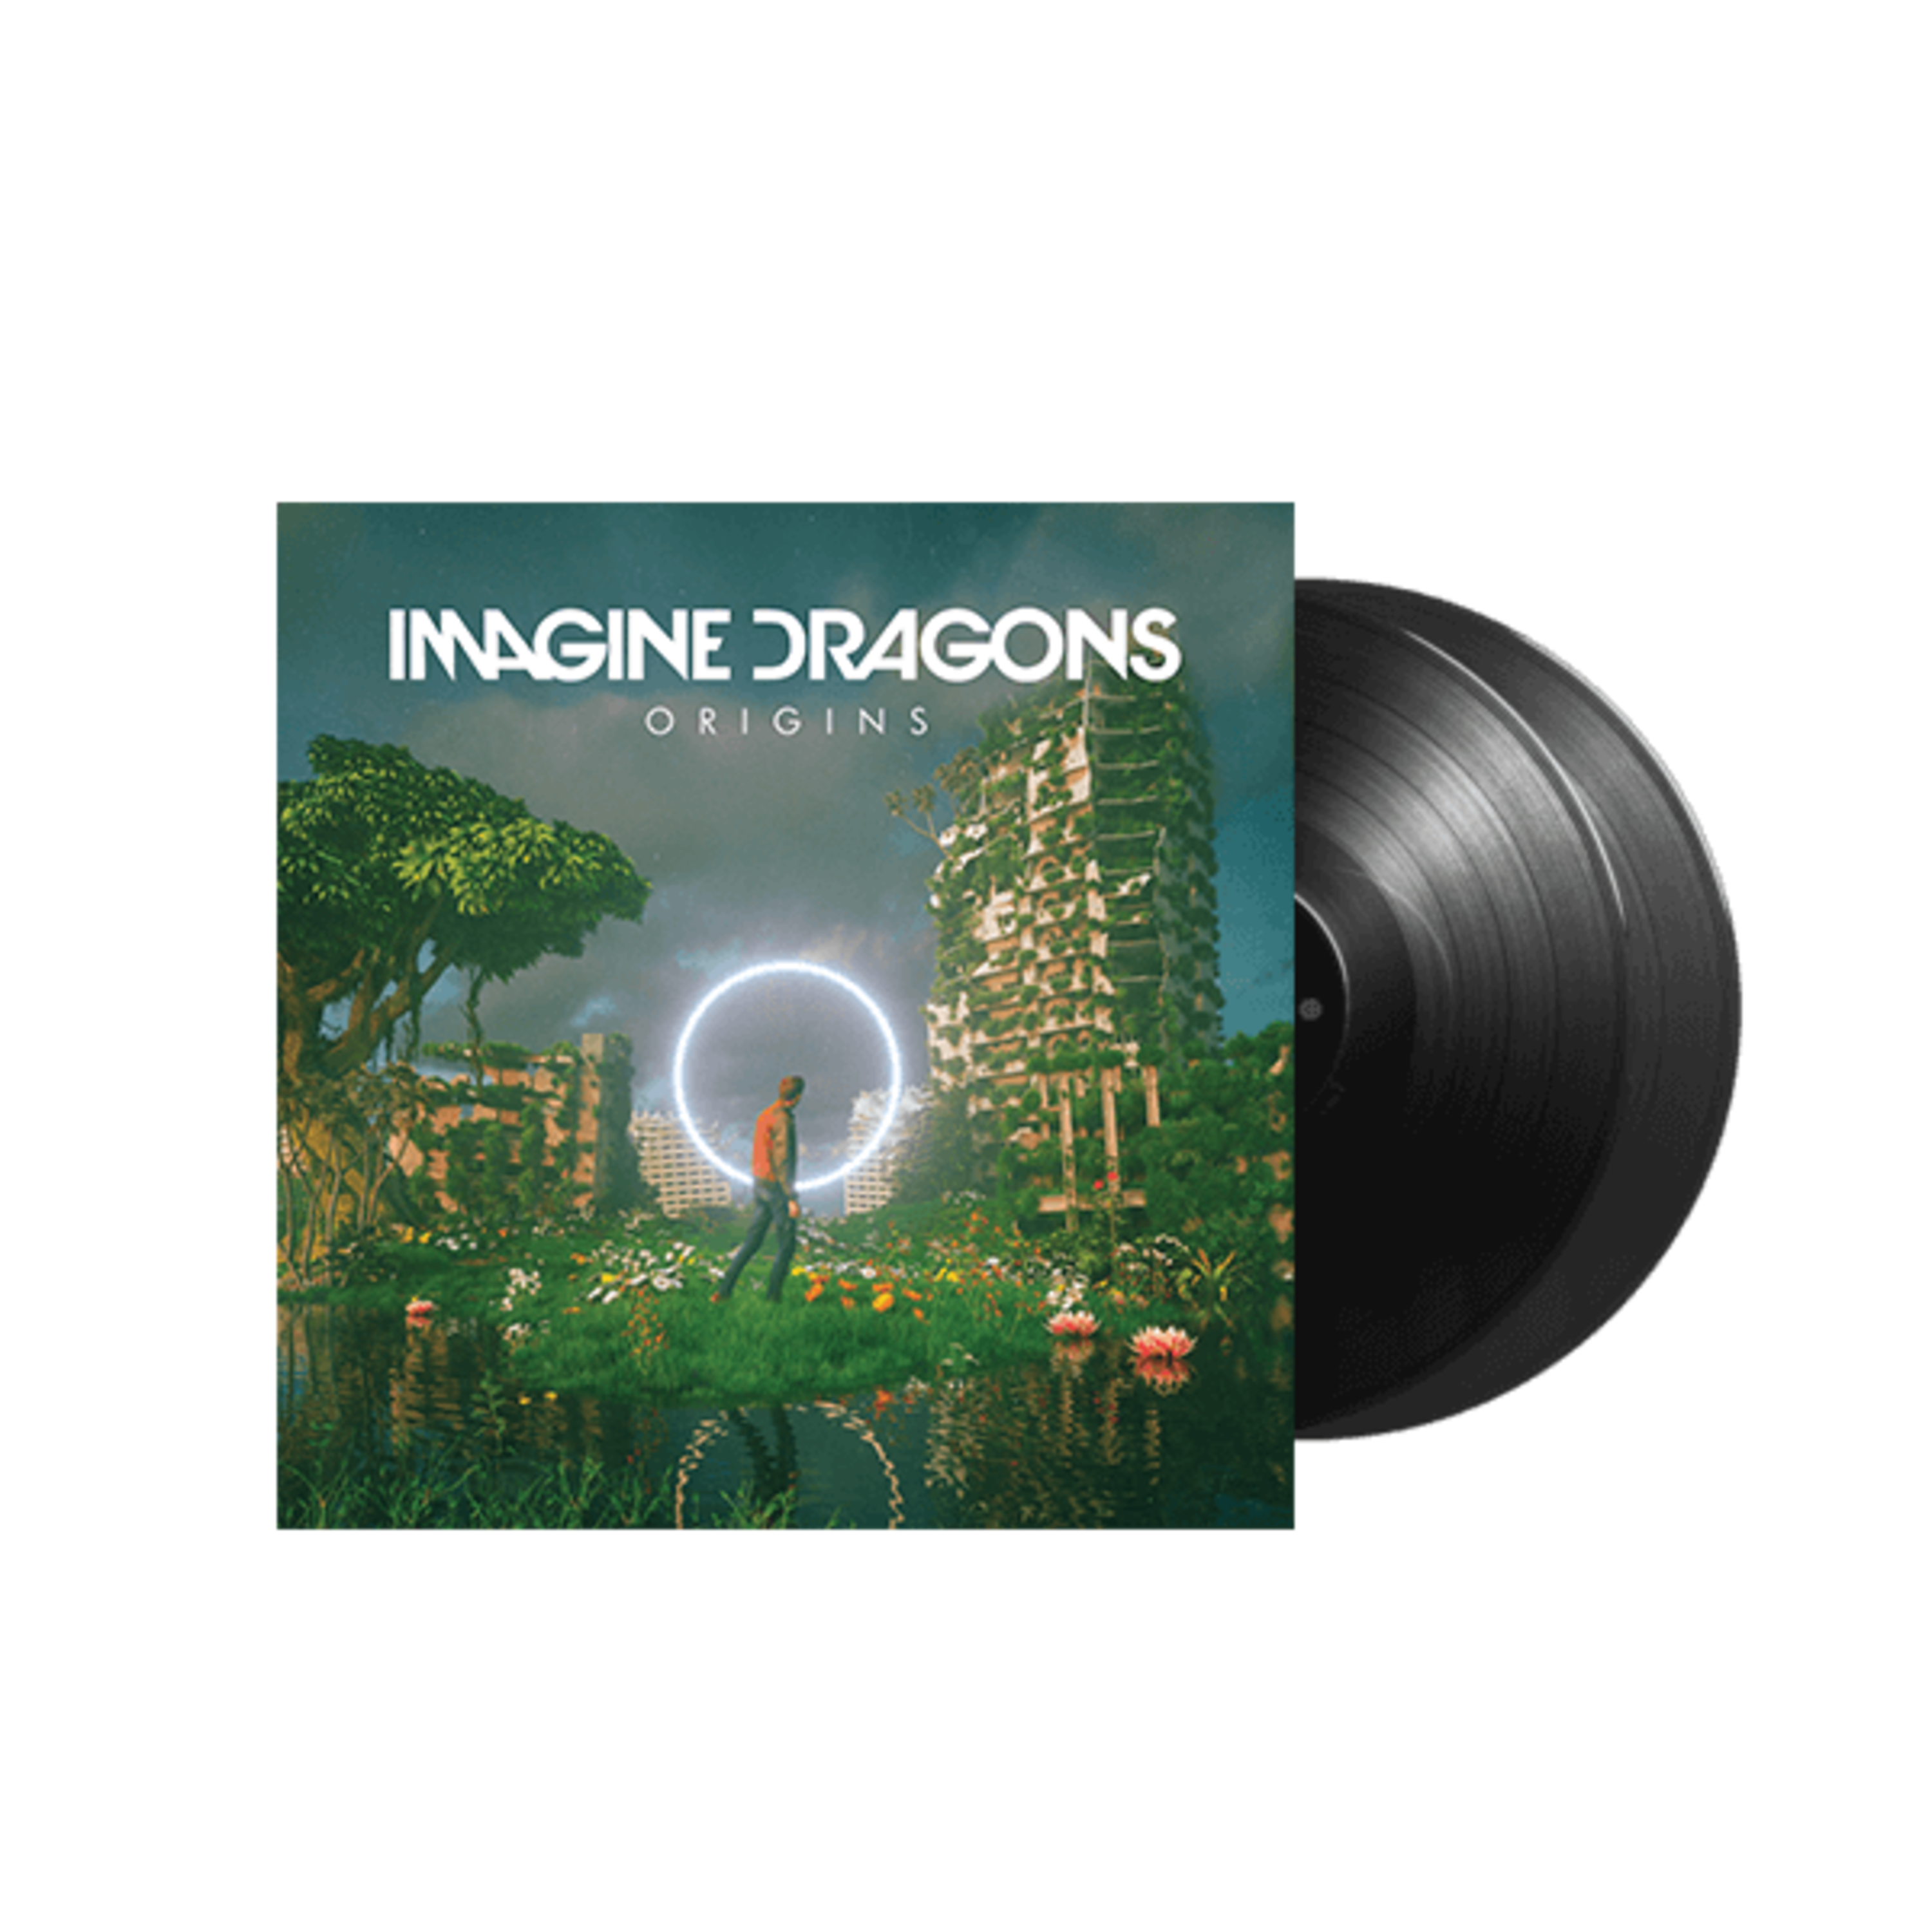 Evolve imagine. Imagine Dragons "Origins". Imagine Dragons альбом Origins. Origins 2018 imagine Dragons. Виниловая пластинка imagine Dragons.